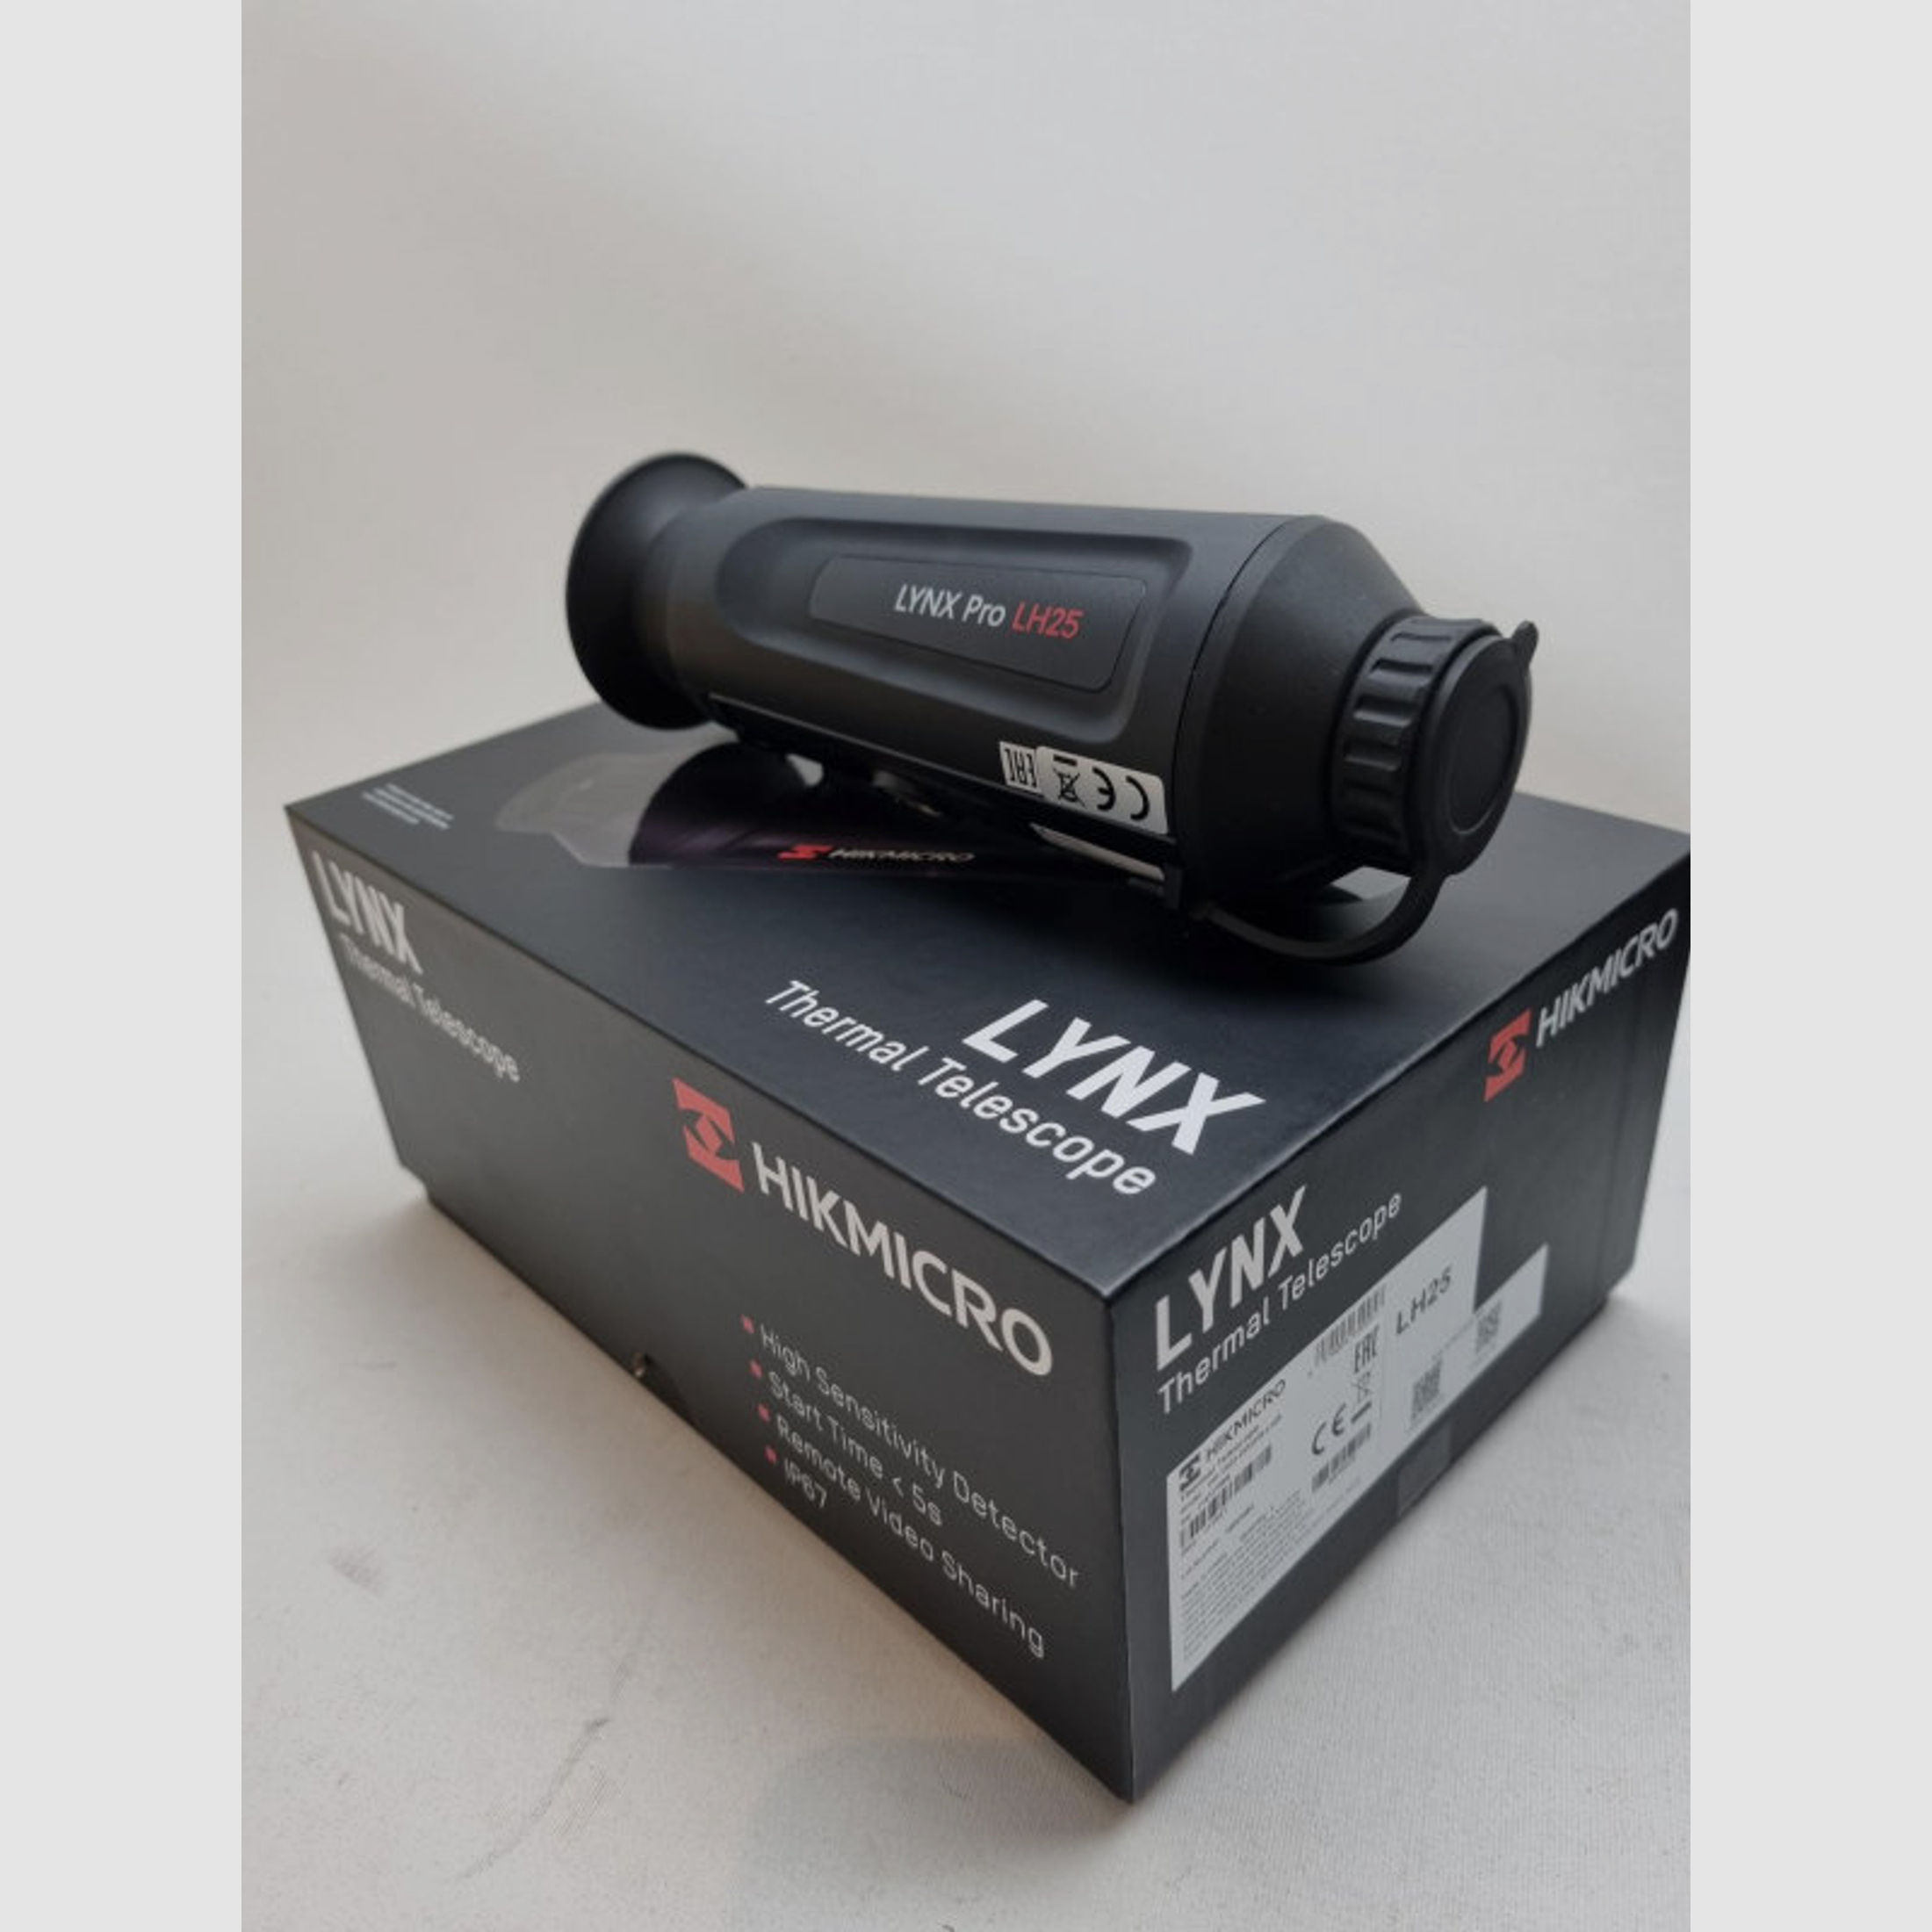 Wärmebildkamera Hikmicro Lynx Pro LH25 *Neuware*